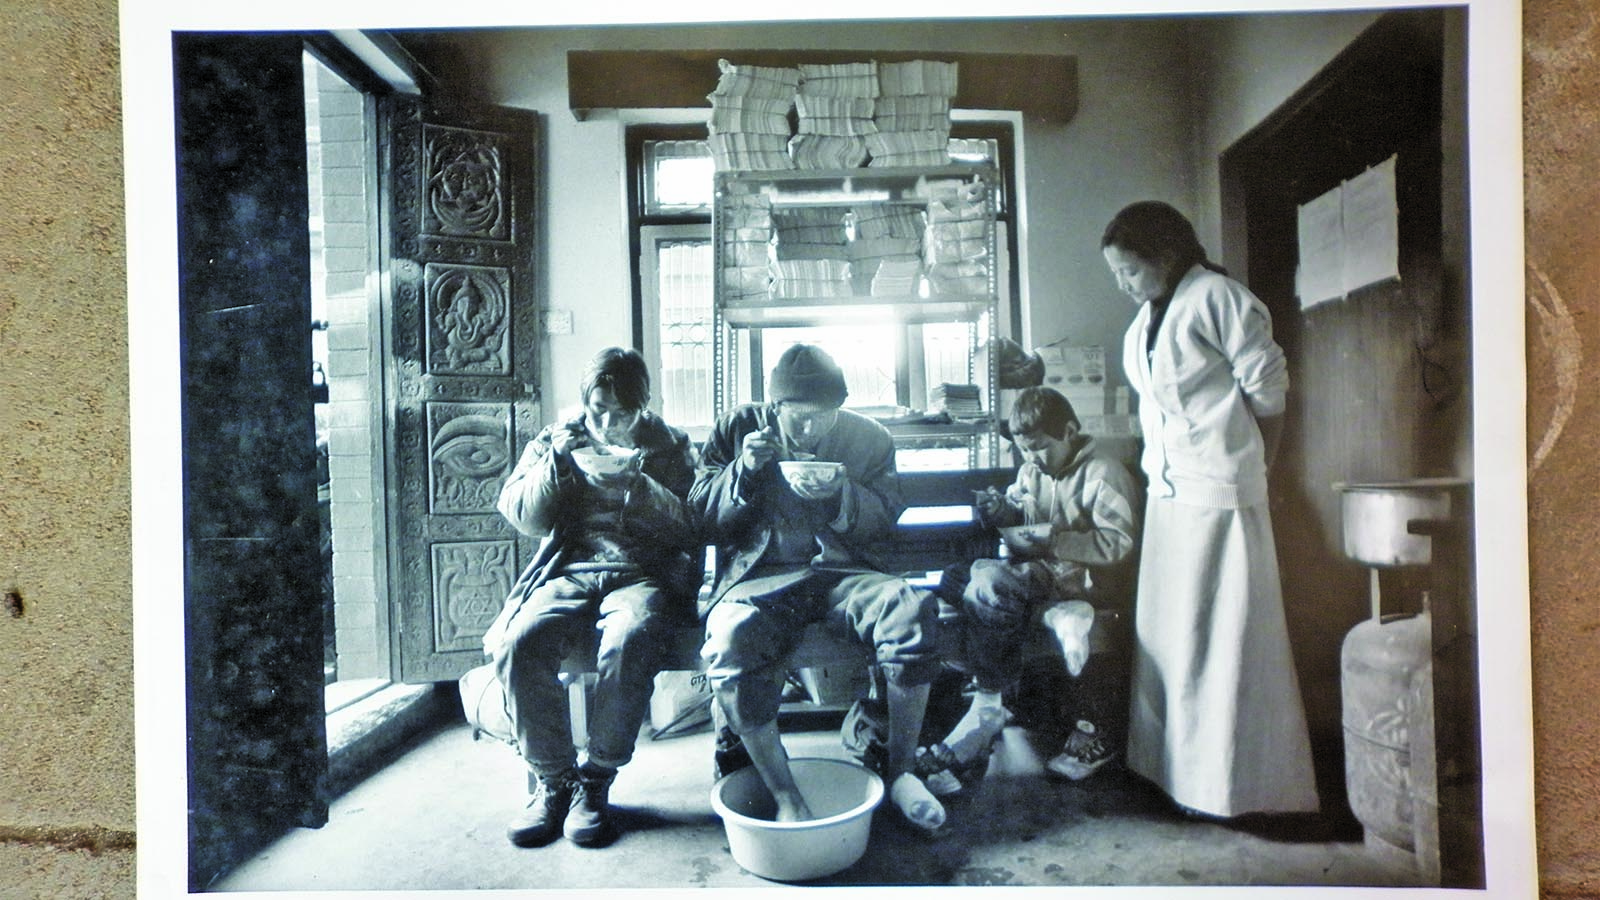 Angel Lopez Sotos photo of a Tibetan refugee family.